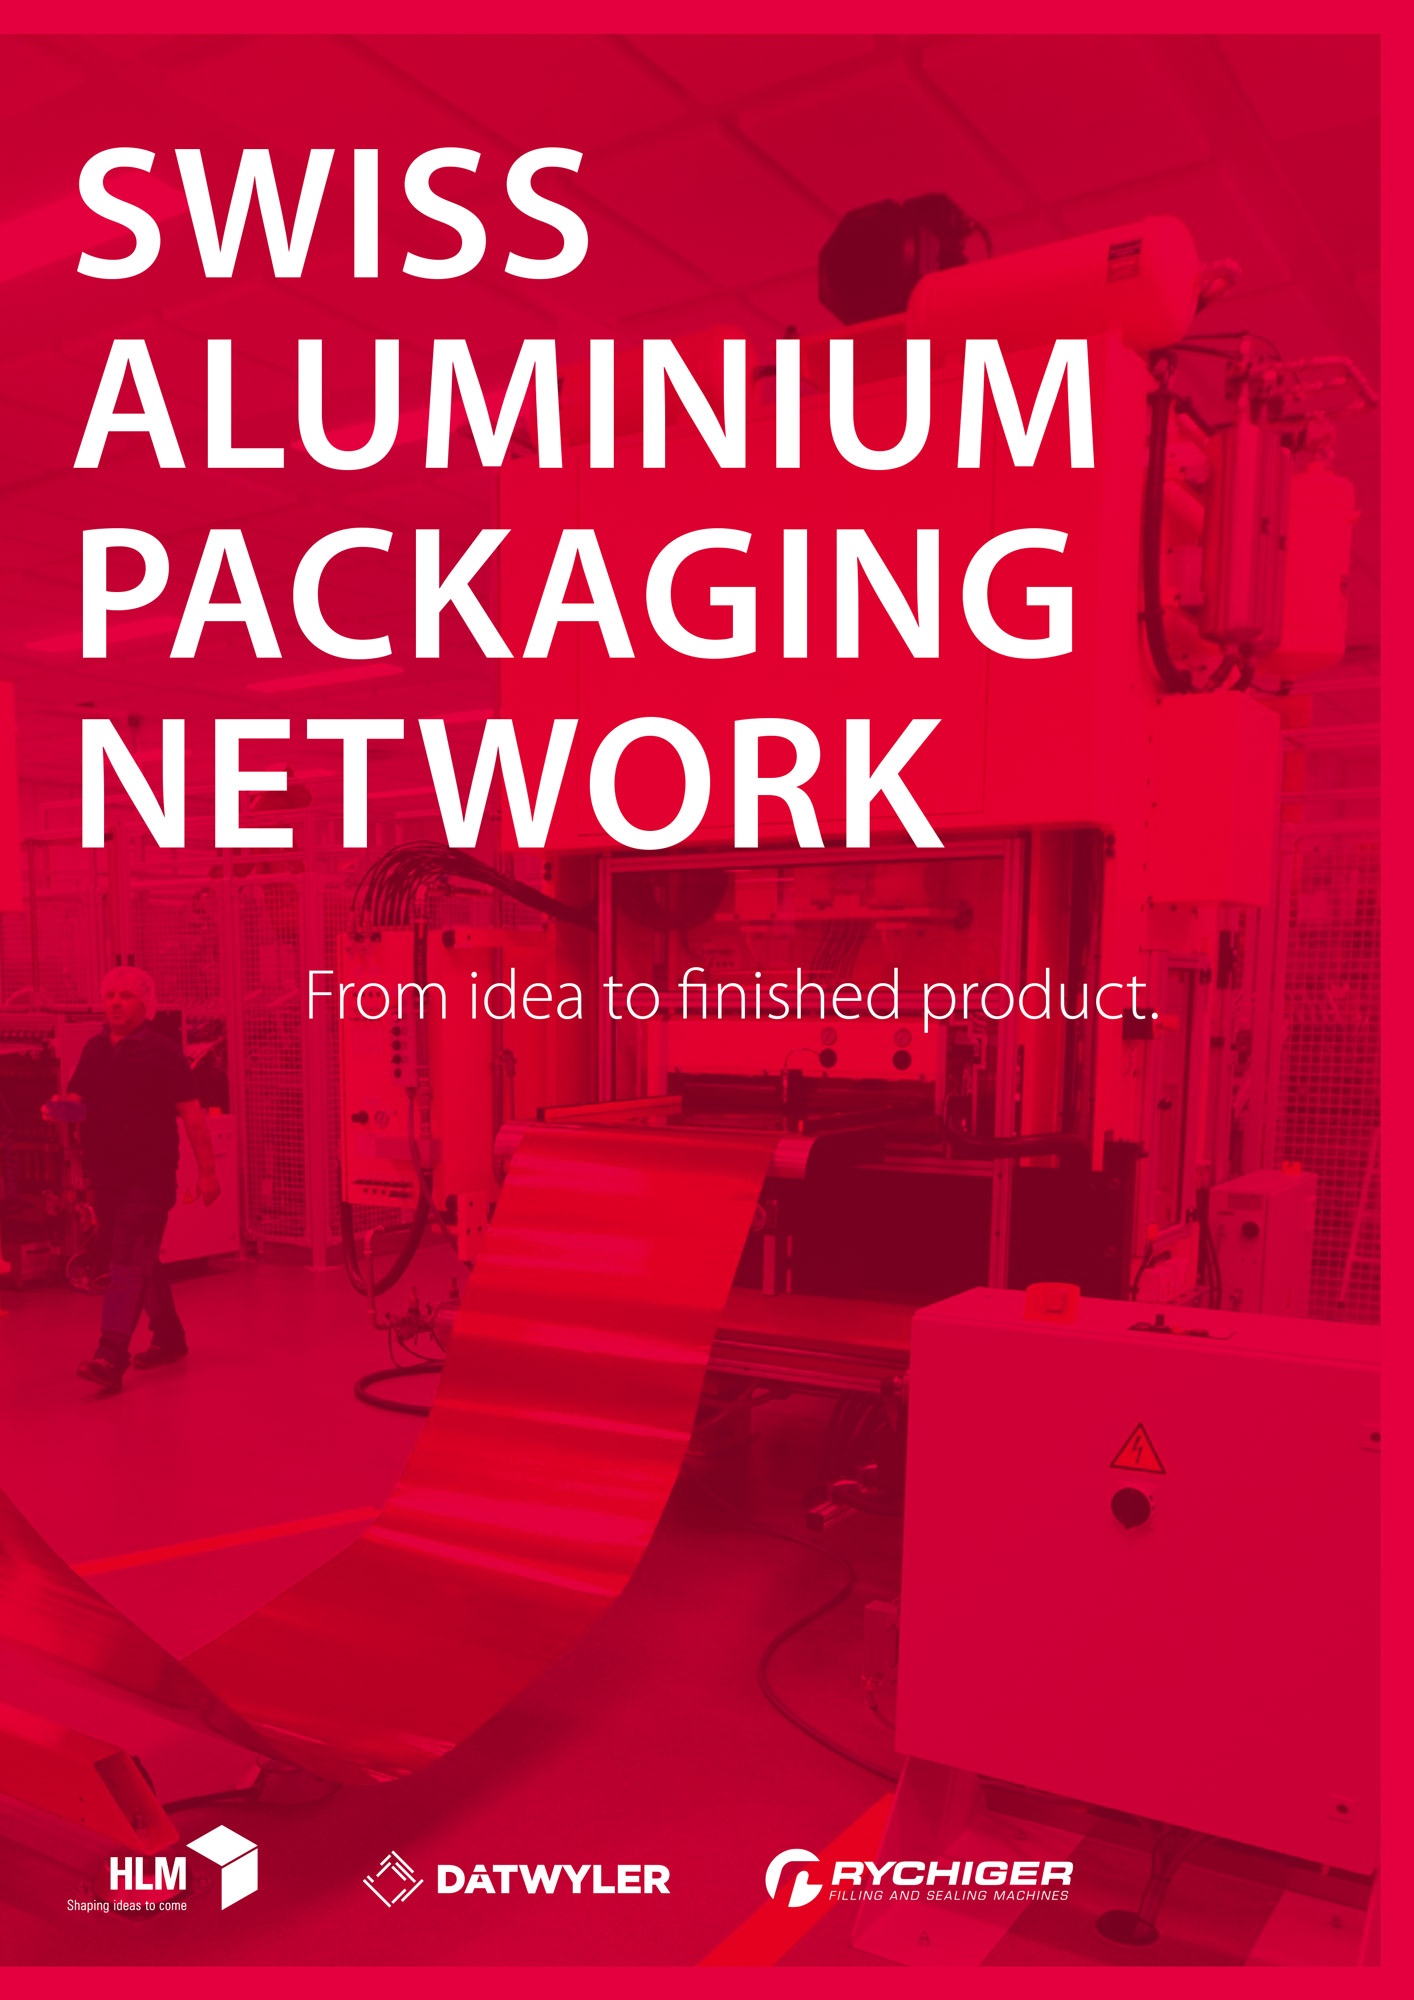 Swiss aluminium packaging network